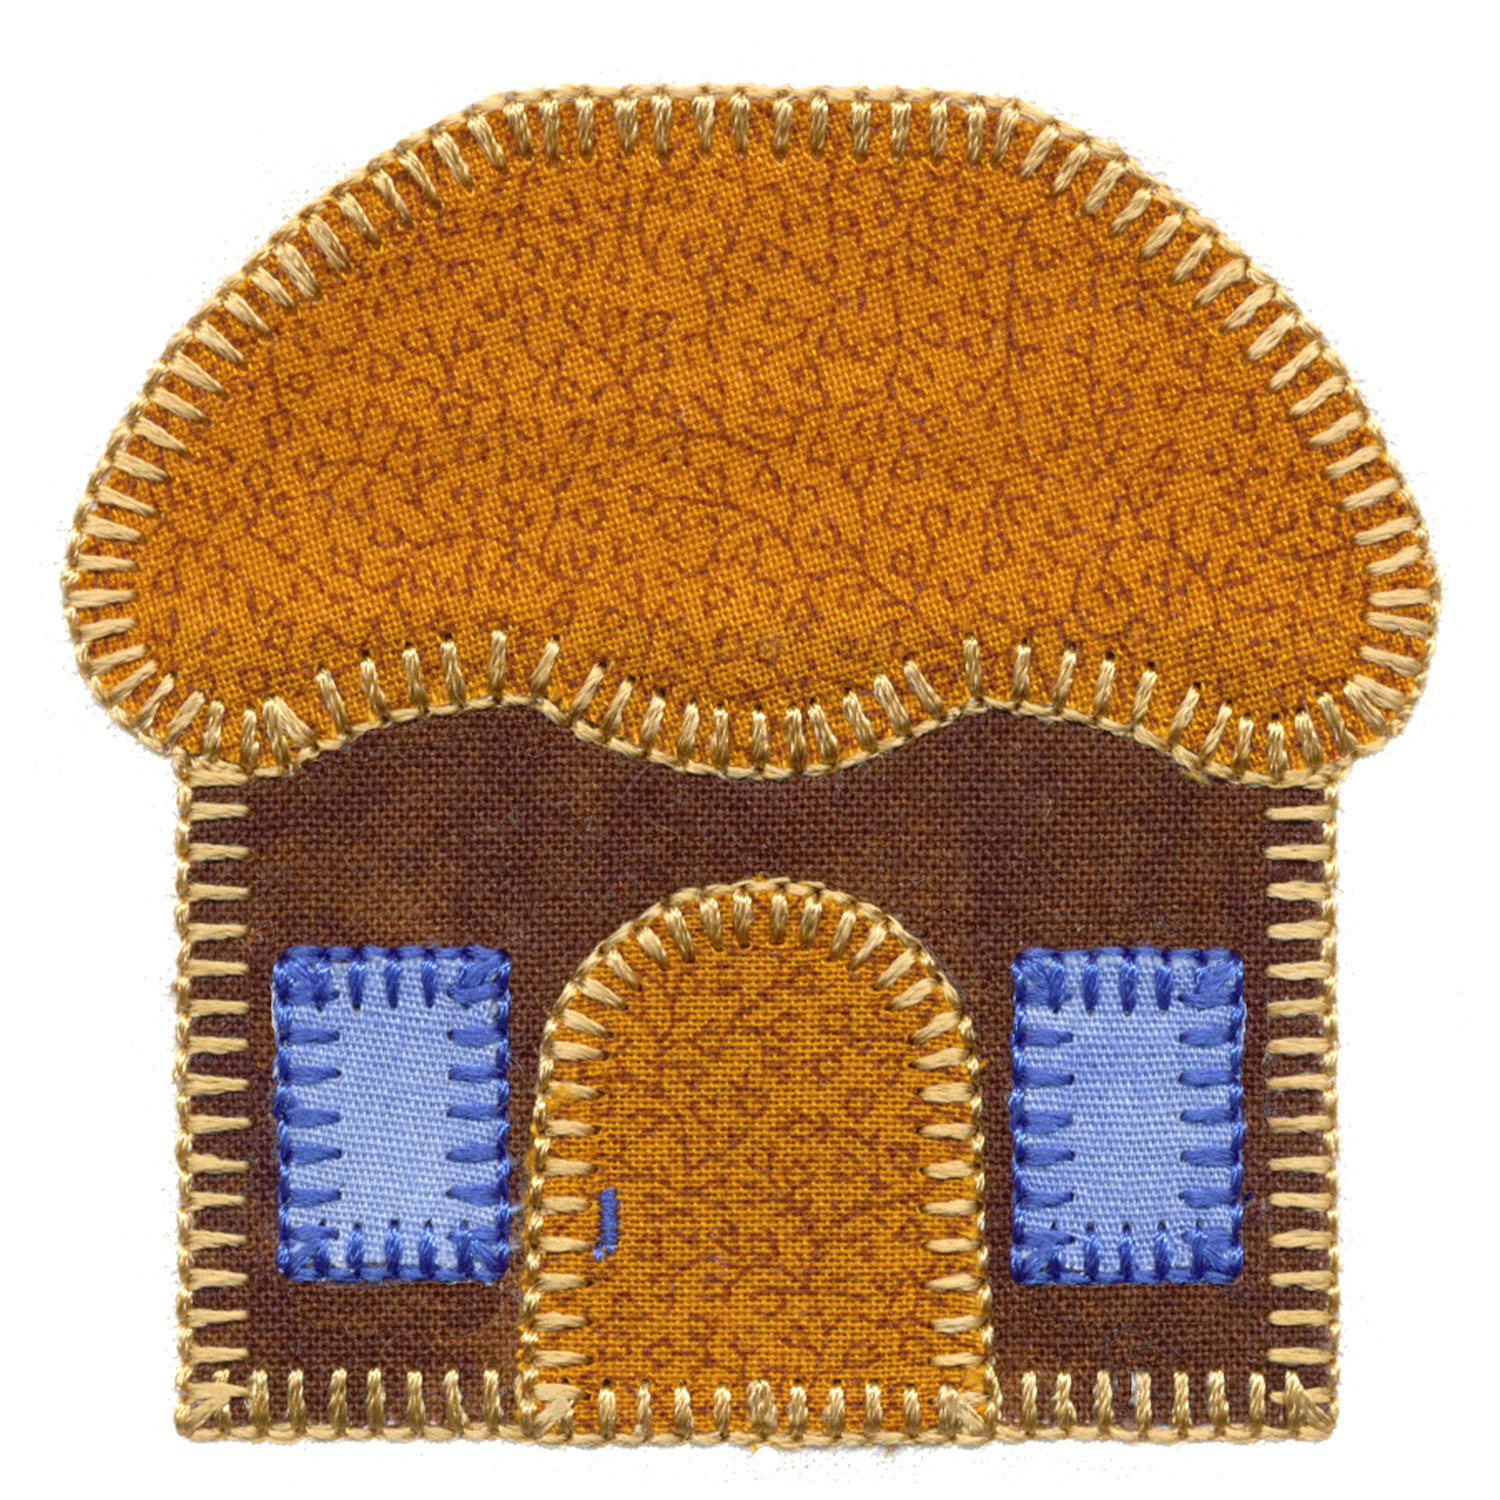 GO! Pom Poms Mini Stocking Embroidery by V-Stitch Designs - AccuQuilt